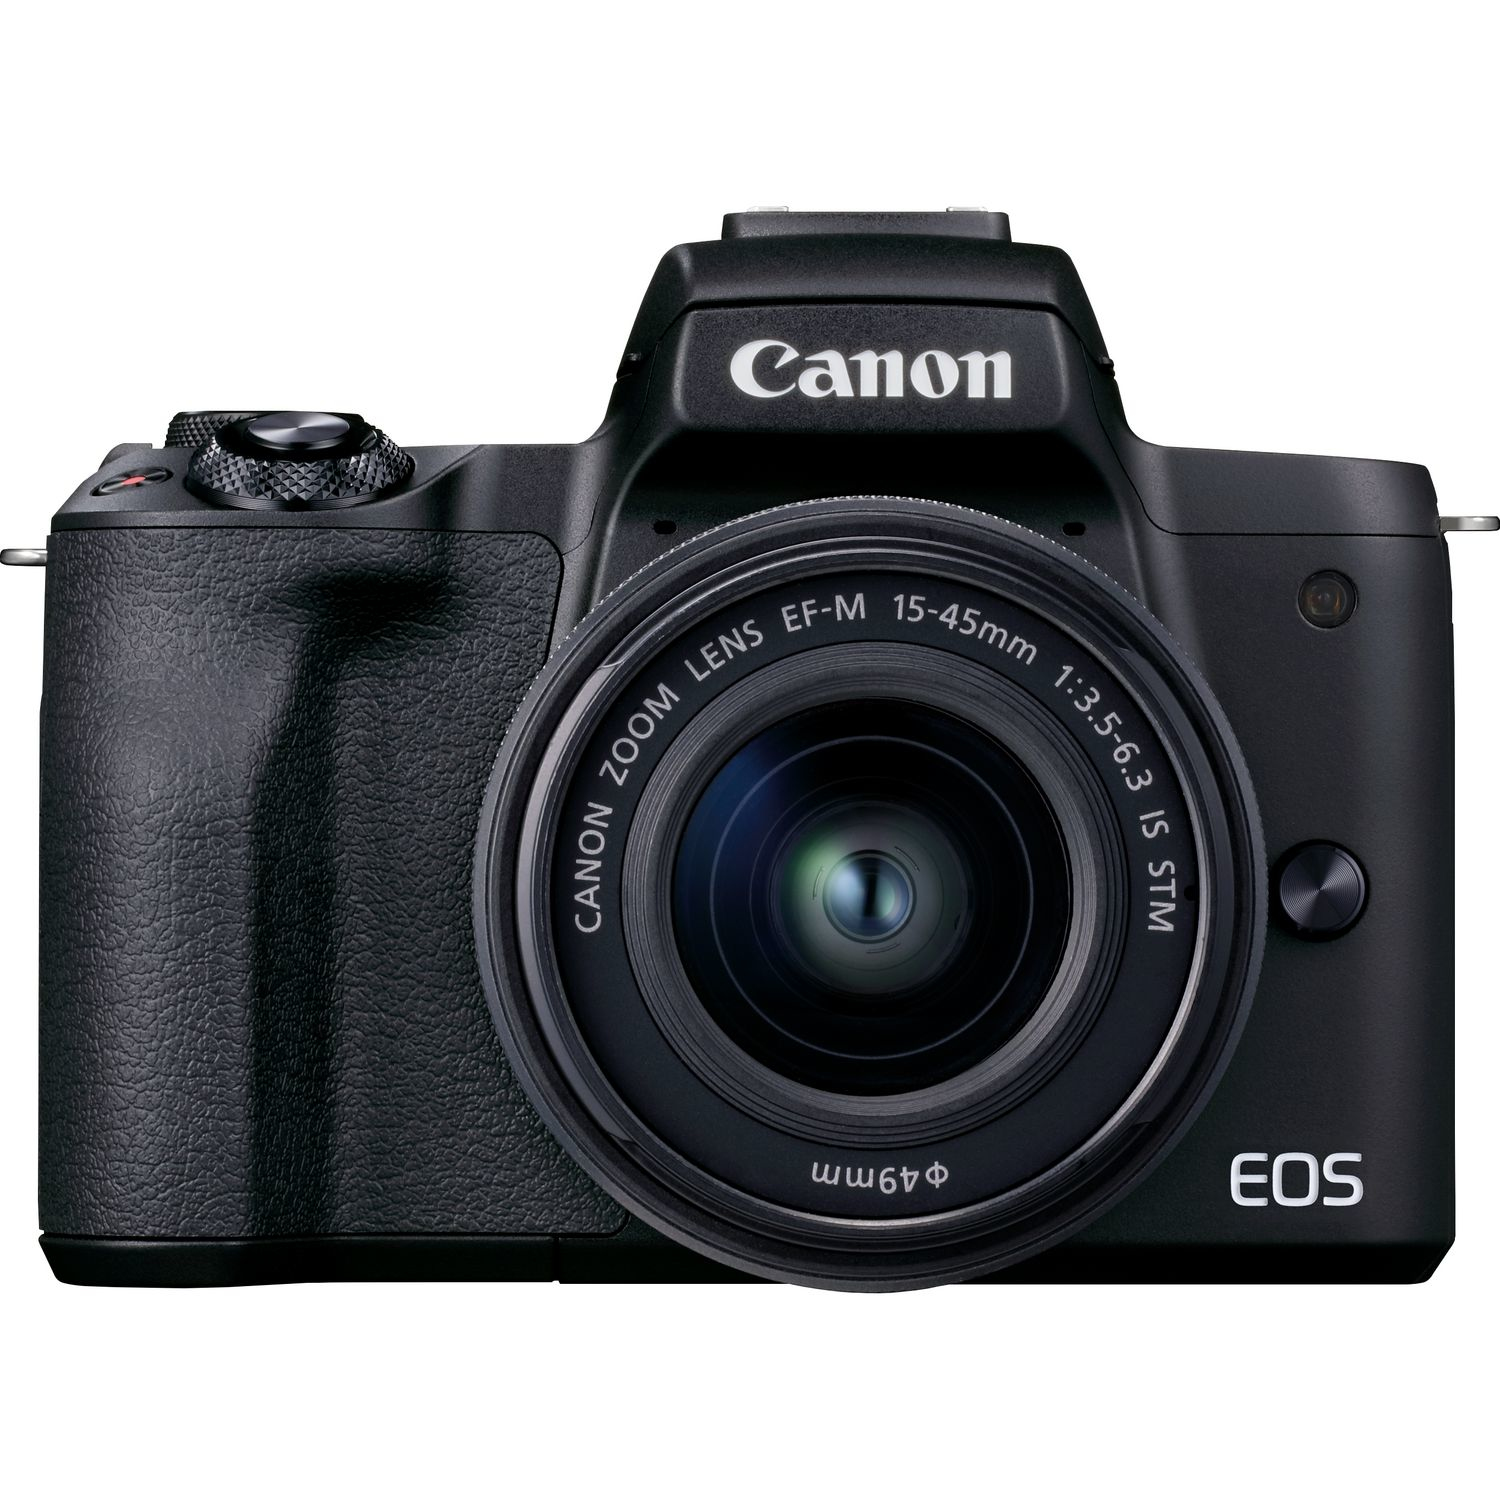 Canon EOS M50 Mark II - Digital camera - mirrorless - 24.1 MP - APS-C - 4K / 24 fps - 3x optical zoom EF-M 15-45mm IS STM lens - Wi-Fi, Bluetooth - black